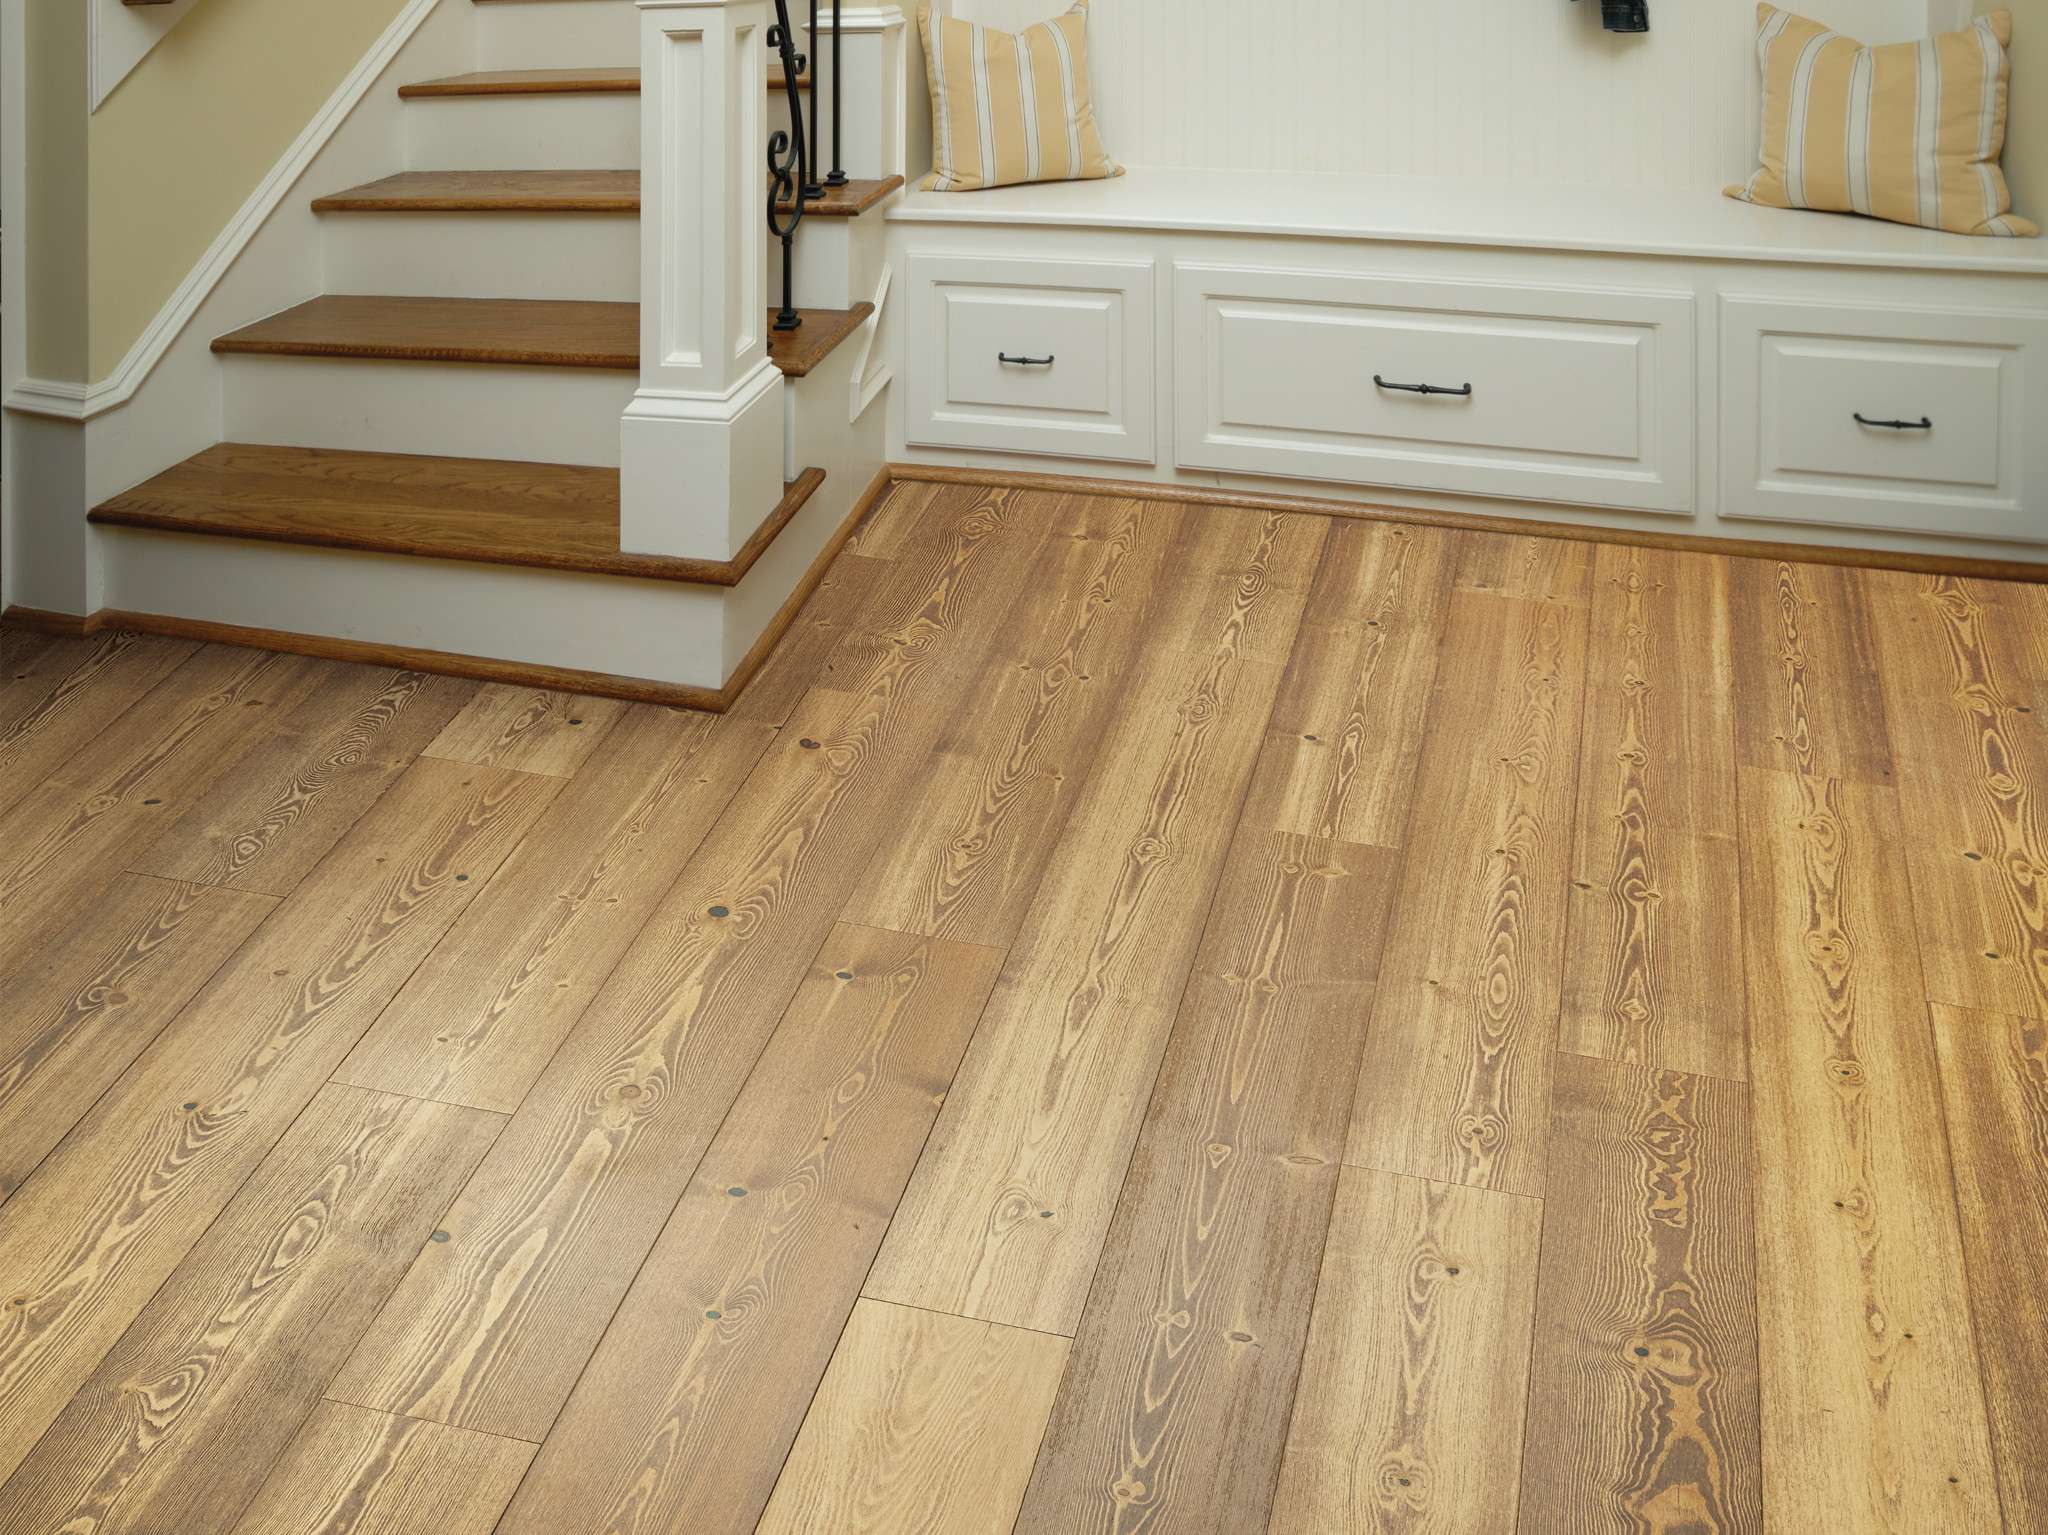 Exquisite Fh820 Spiced Pine Hardwoods, Exquisite Hardwood Floors Inc